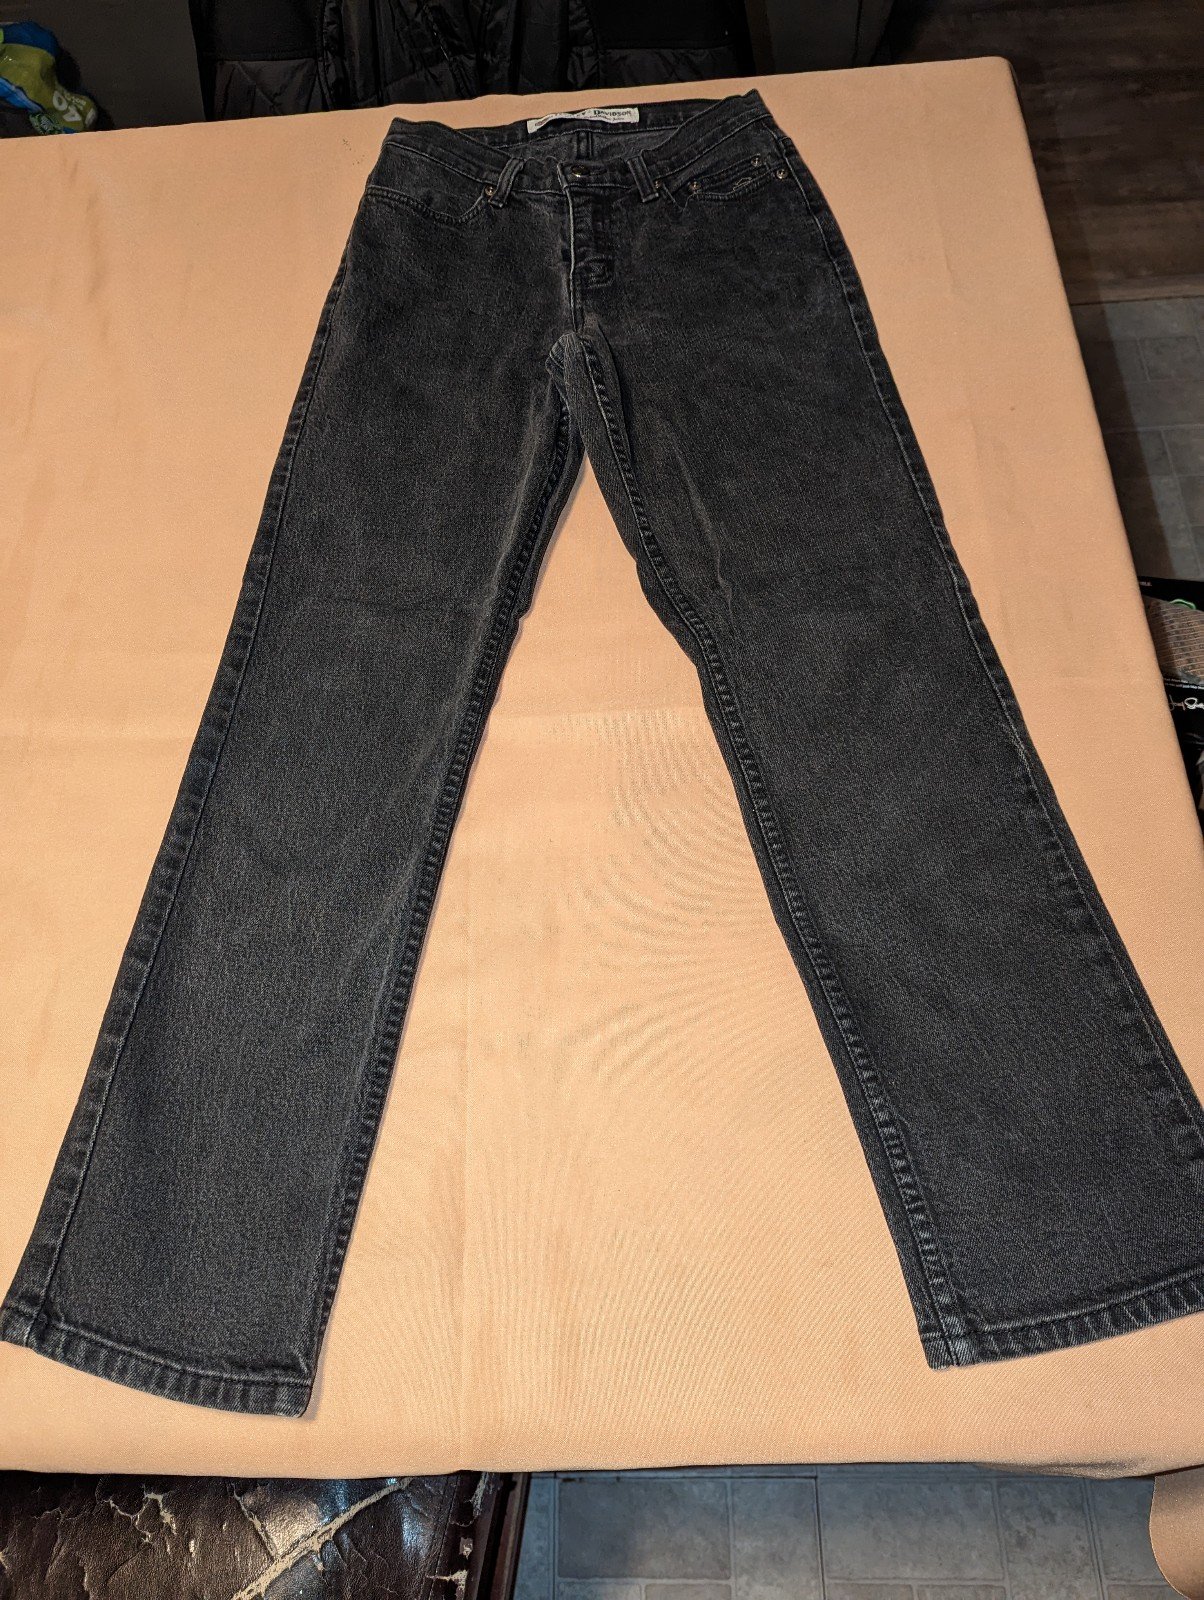 Popular Harley Davidson Women´s Black Jeans Size 2P Straight Leg 97% Cotton kgAcpgOCR on sale